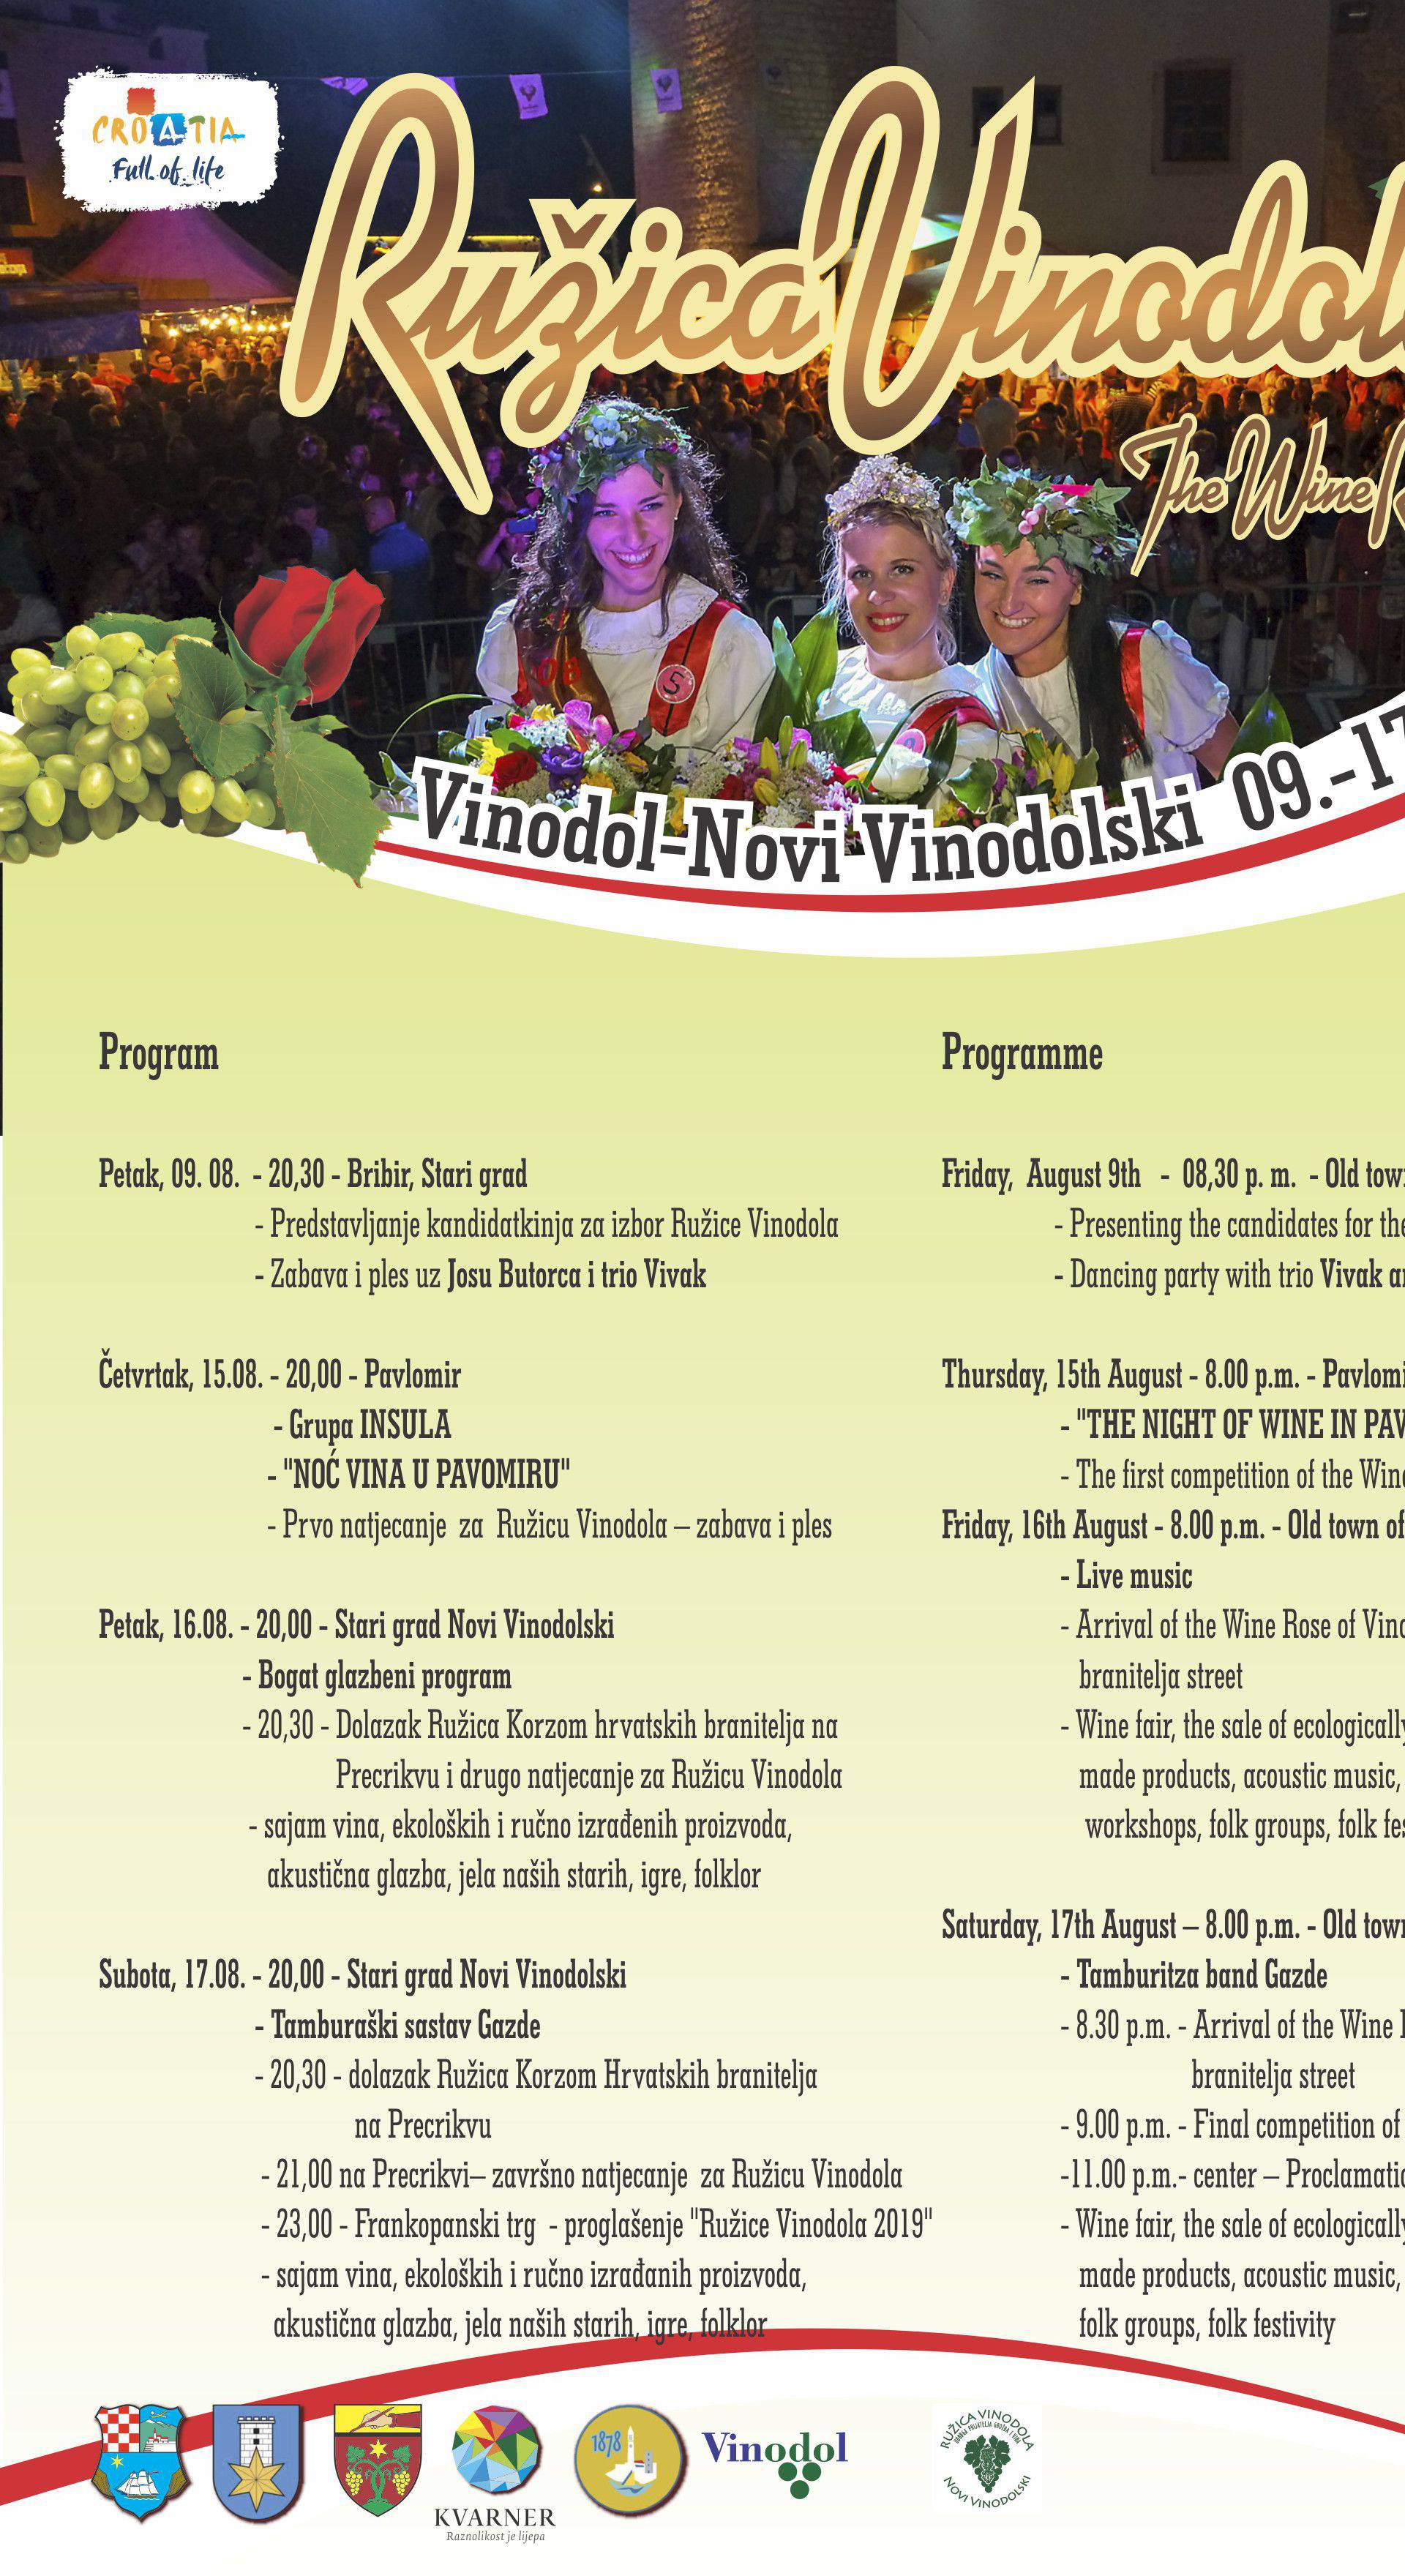 Ružica Vinodola - upoznajte sadnju vinograda u Vinodolu